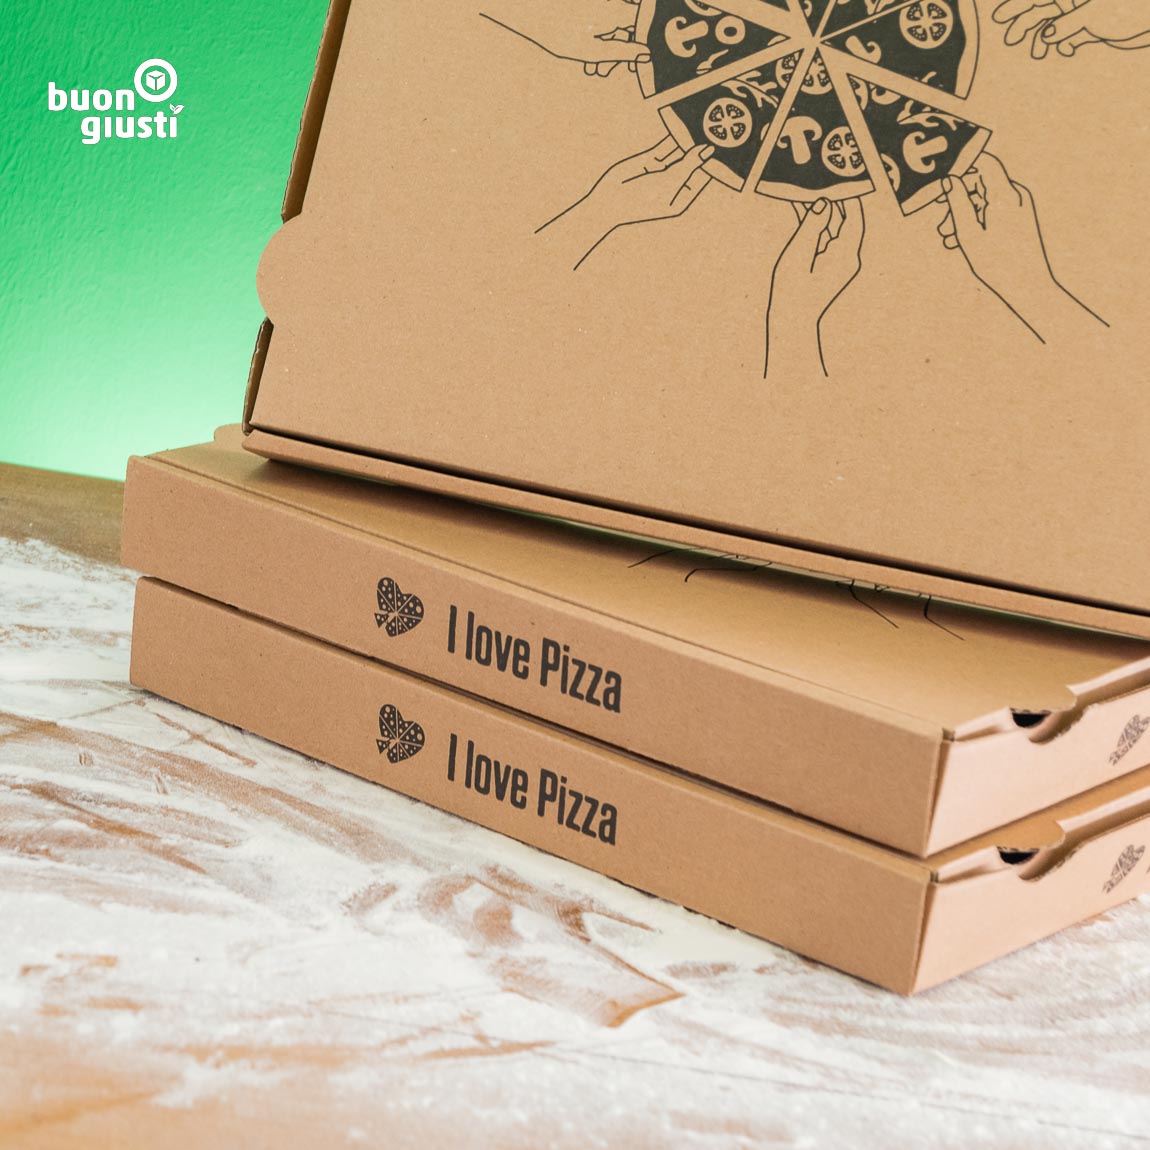 200 Stk. | 33x33x4 cm Pizzakarton Doppel-Kraft "I LOVE PIZZA" Motivdruck - Pizzakarton - buongiusti AG - personalisiert ab 100 Stück